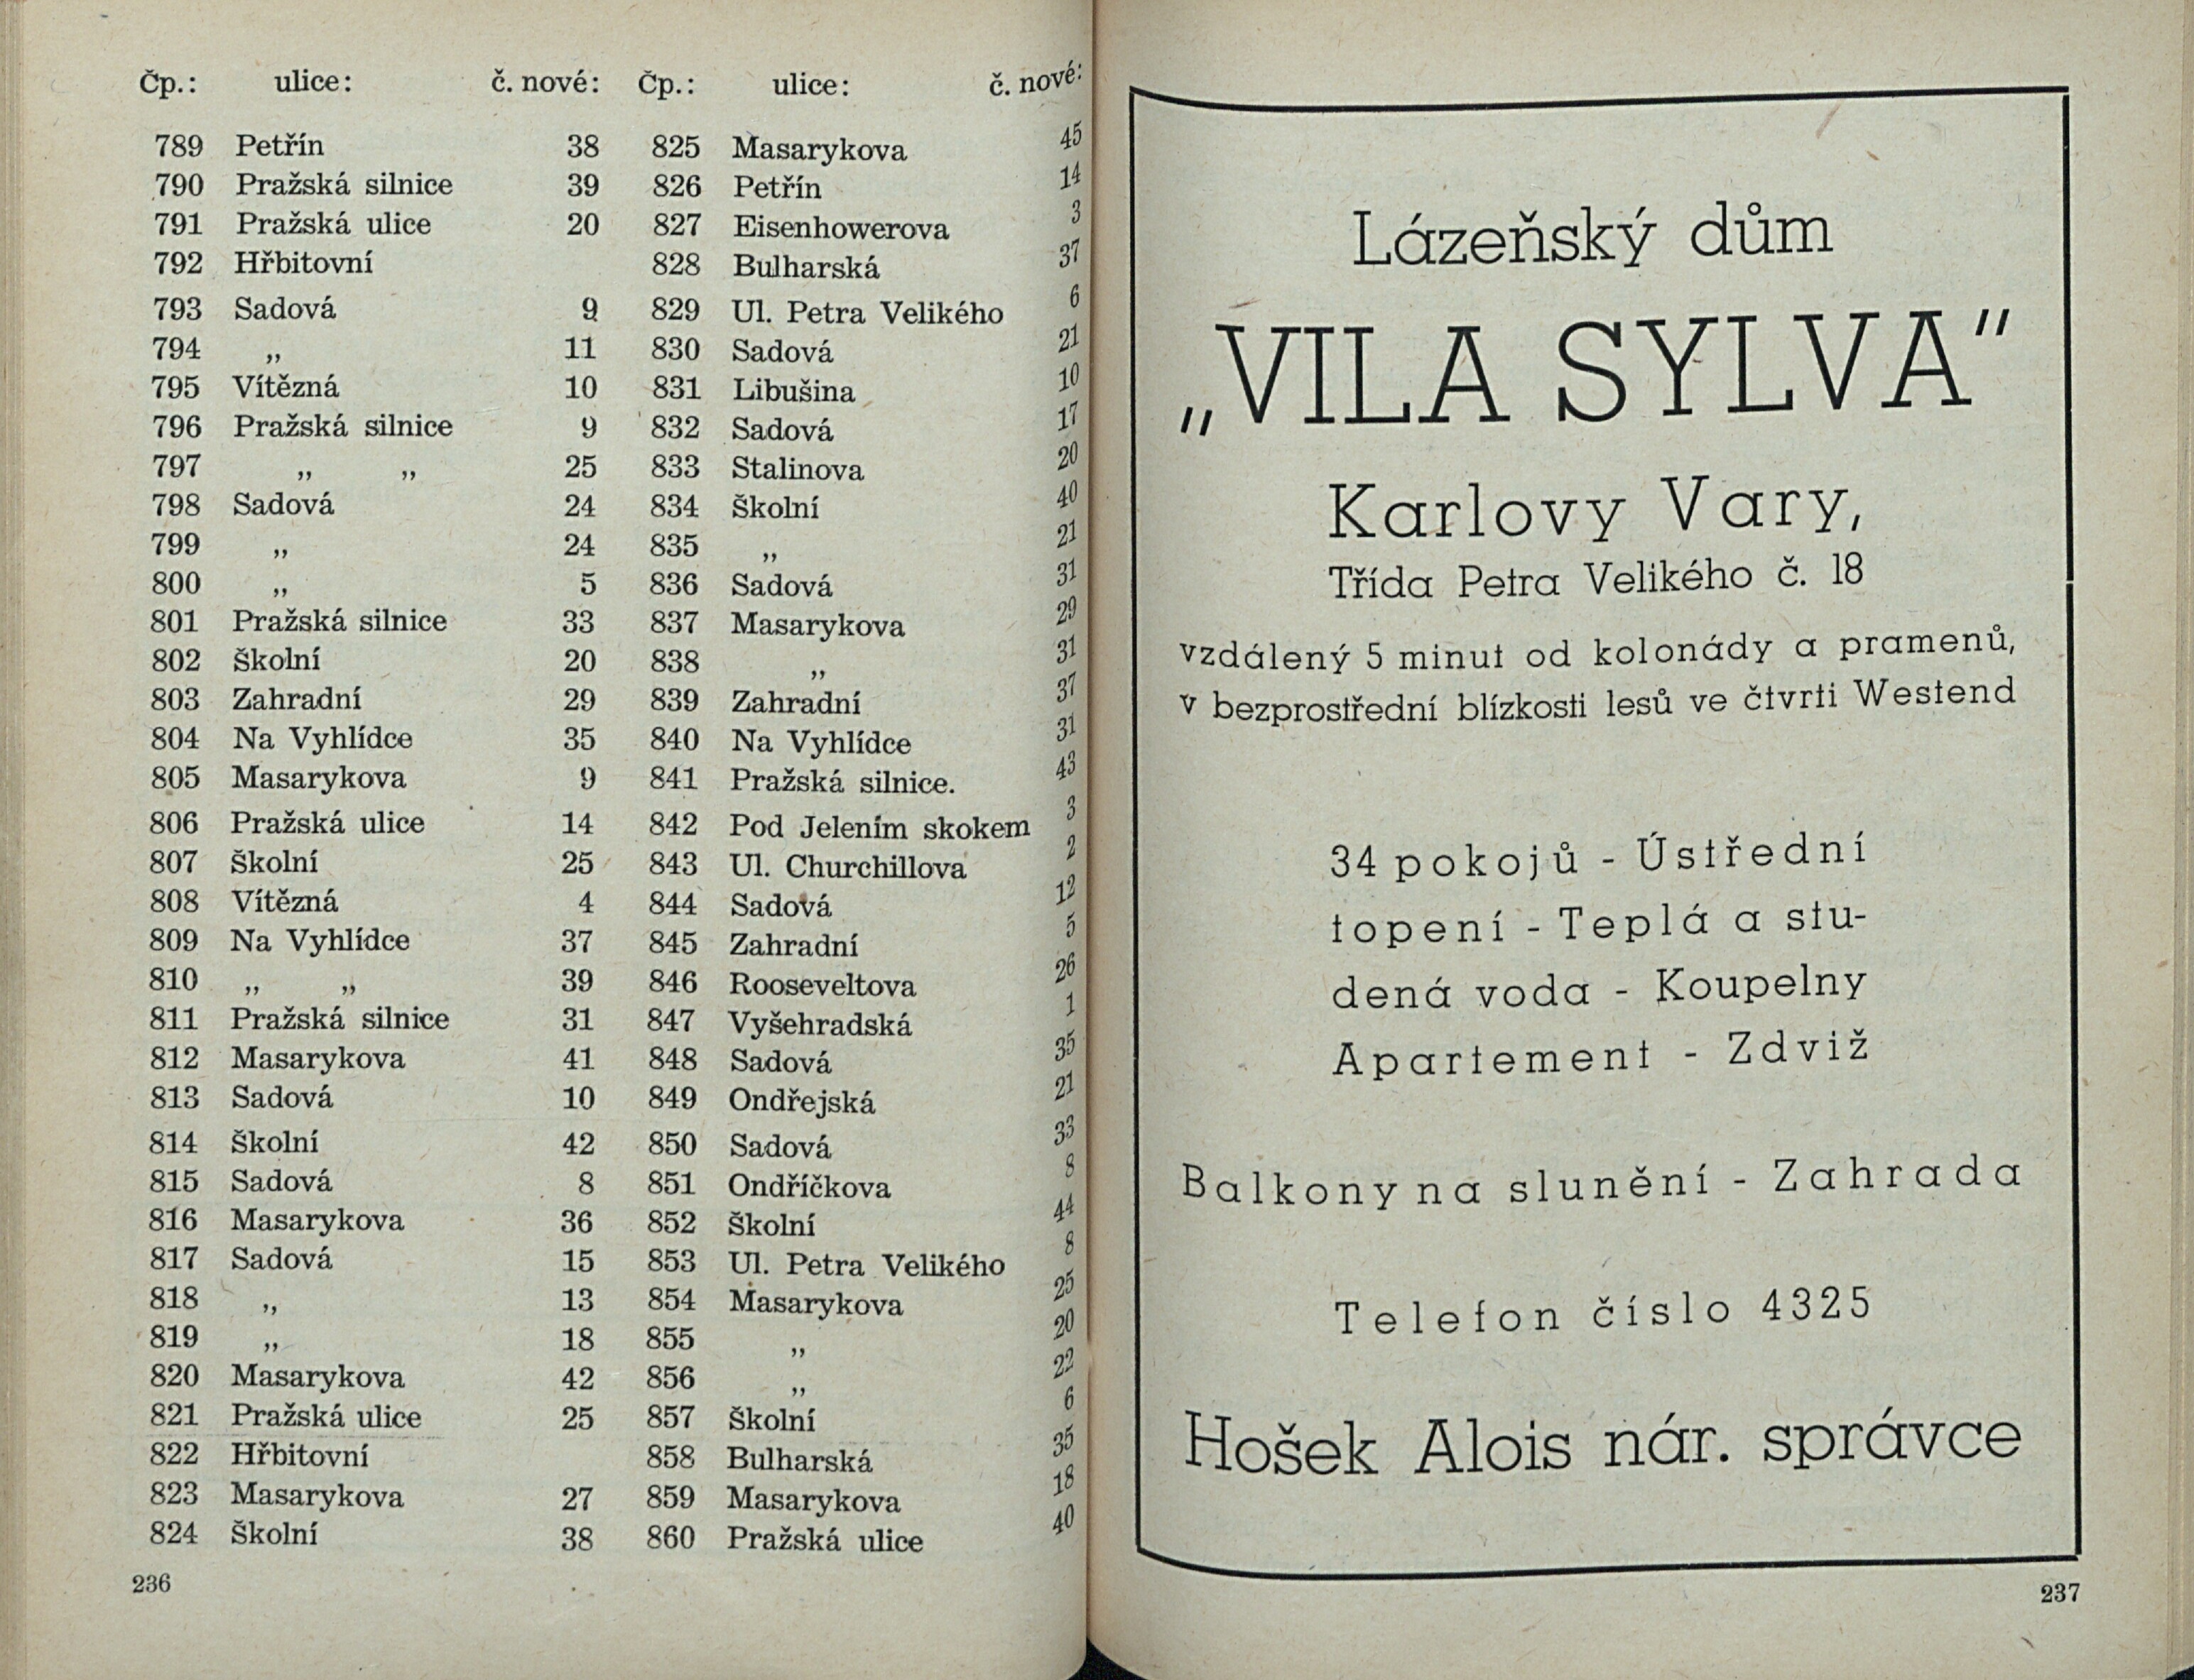 136. soap-kv_knihovna_adresar-karlovy-vary-1945_1370